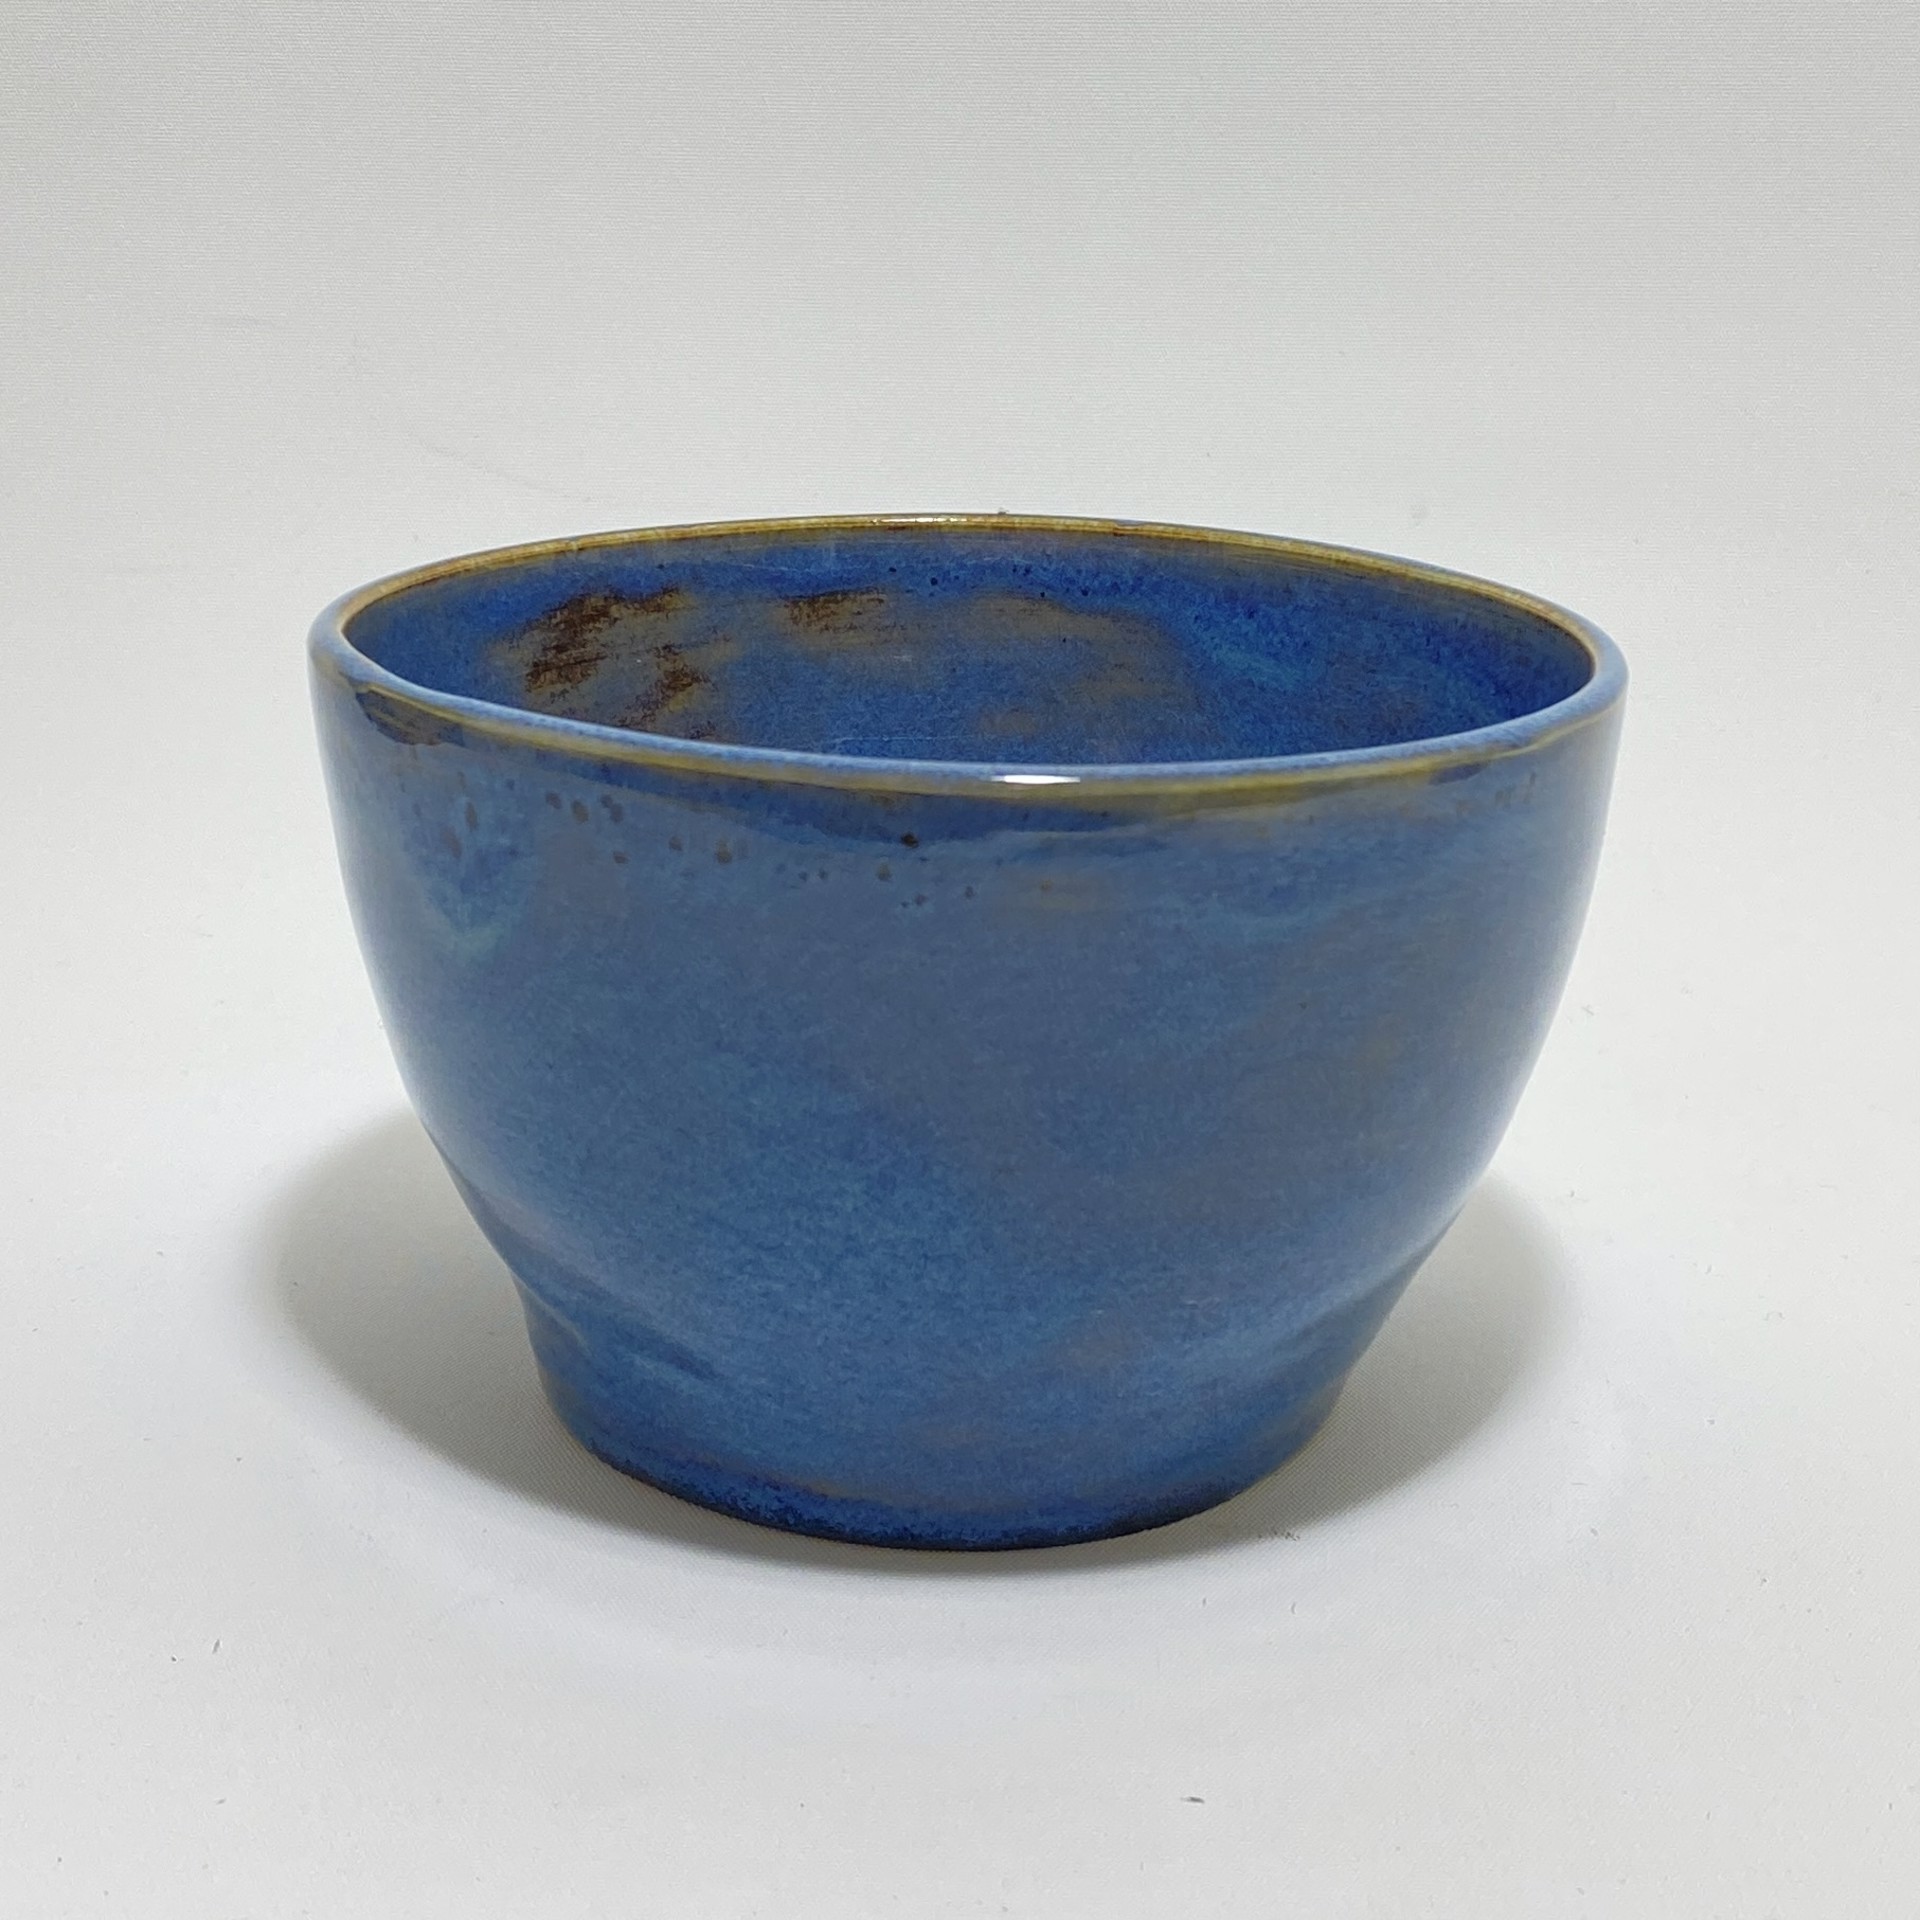 "Sky Blue Bowl" by Tazia by One Step Beyond